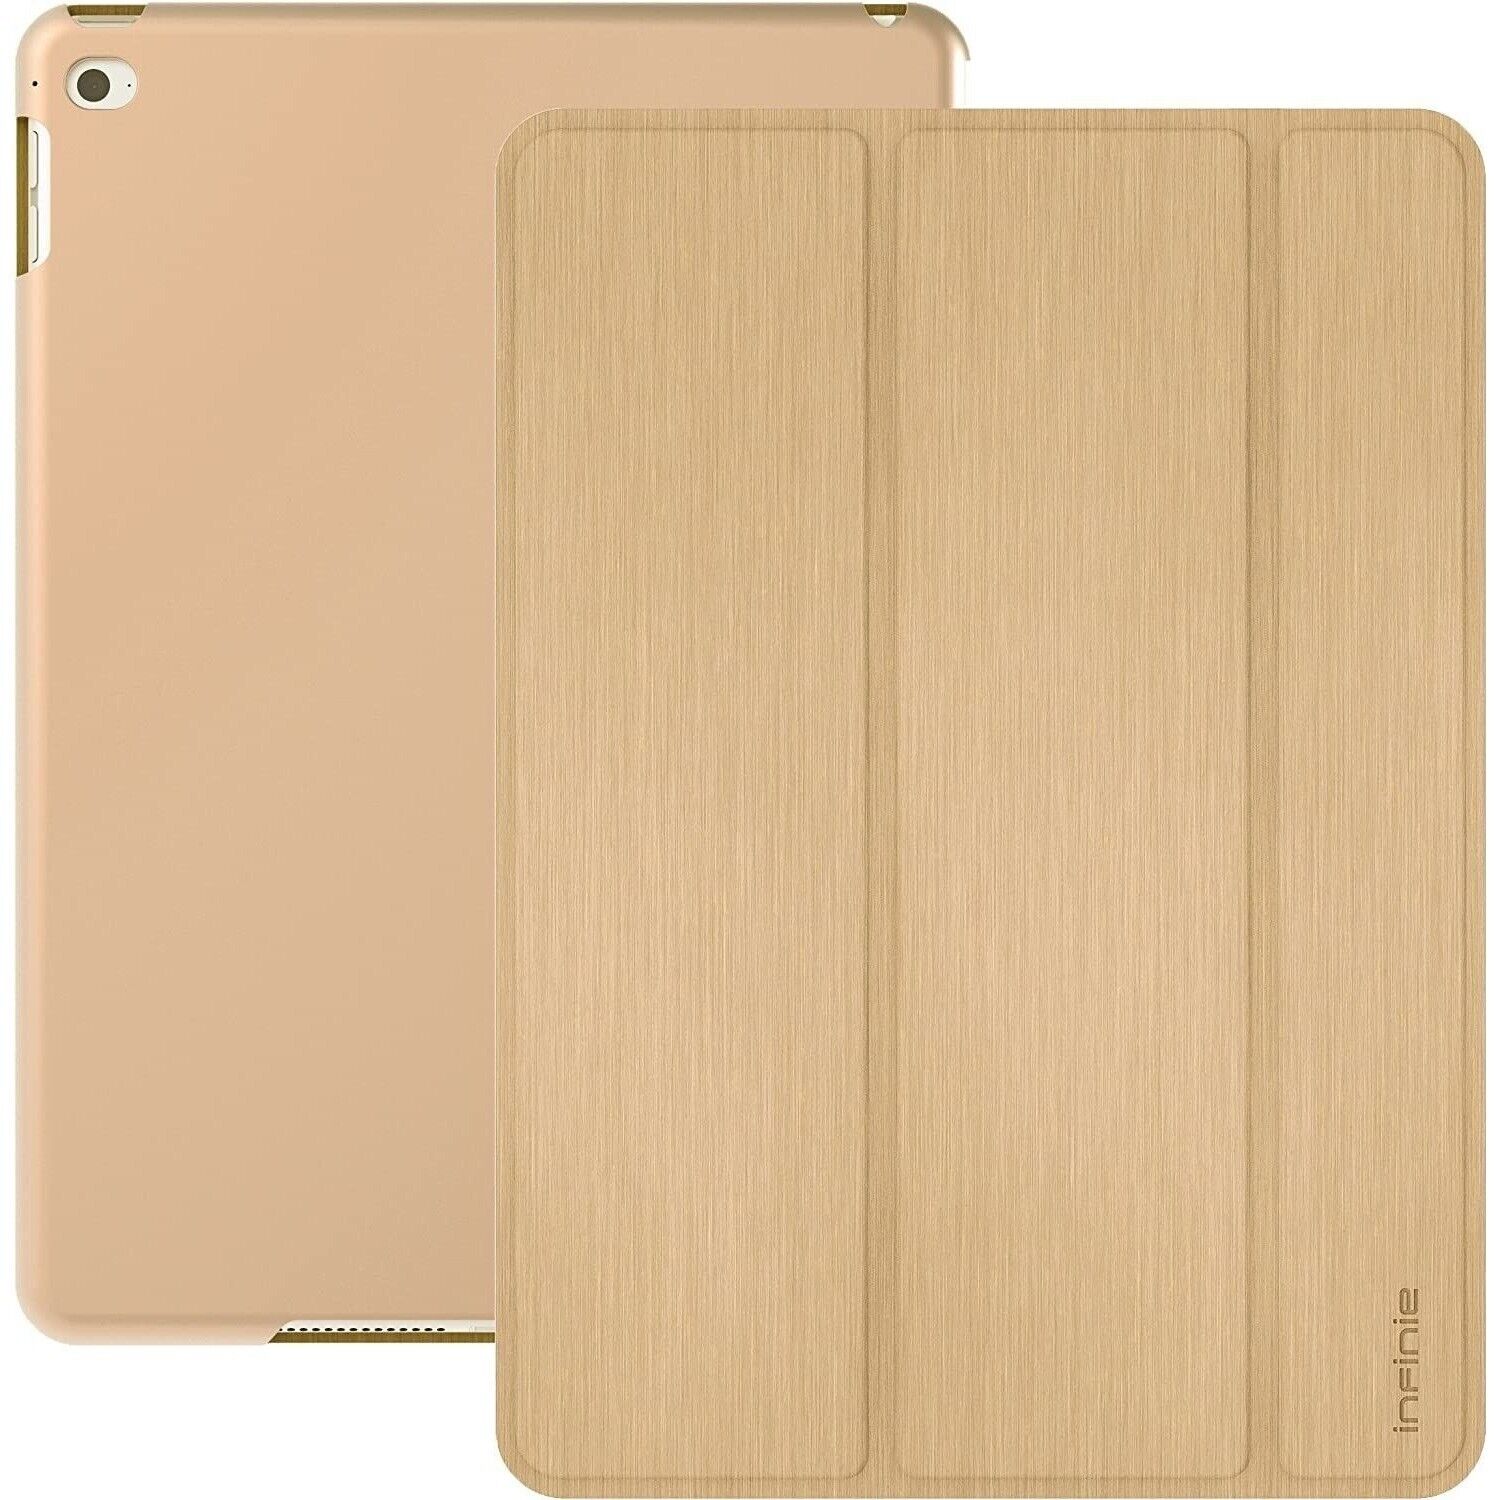 iPad Air 2 Sleep Wake Case | Beige | Protective PU Leather | Smart Case Cover